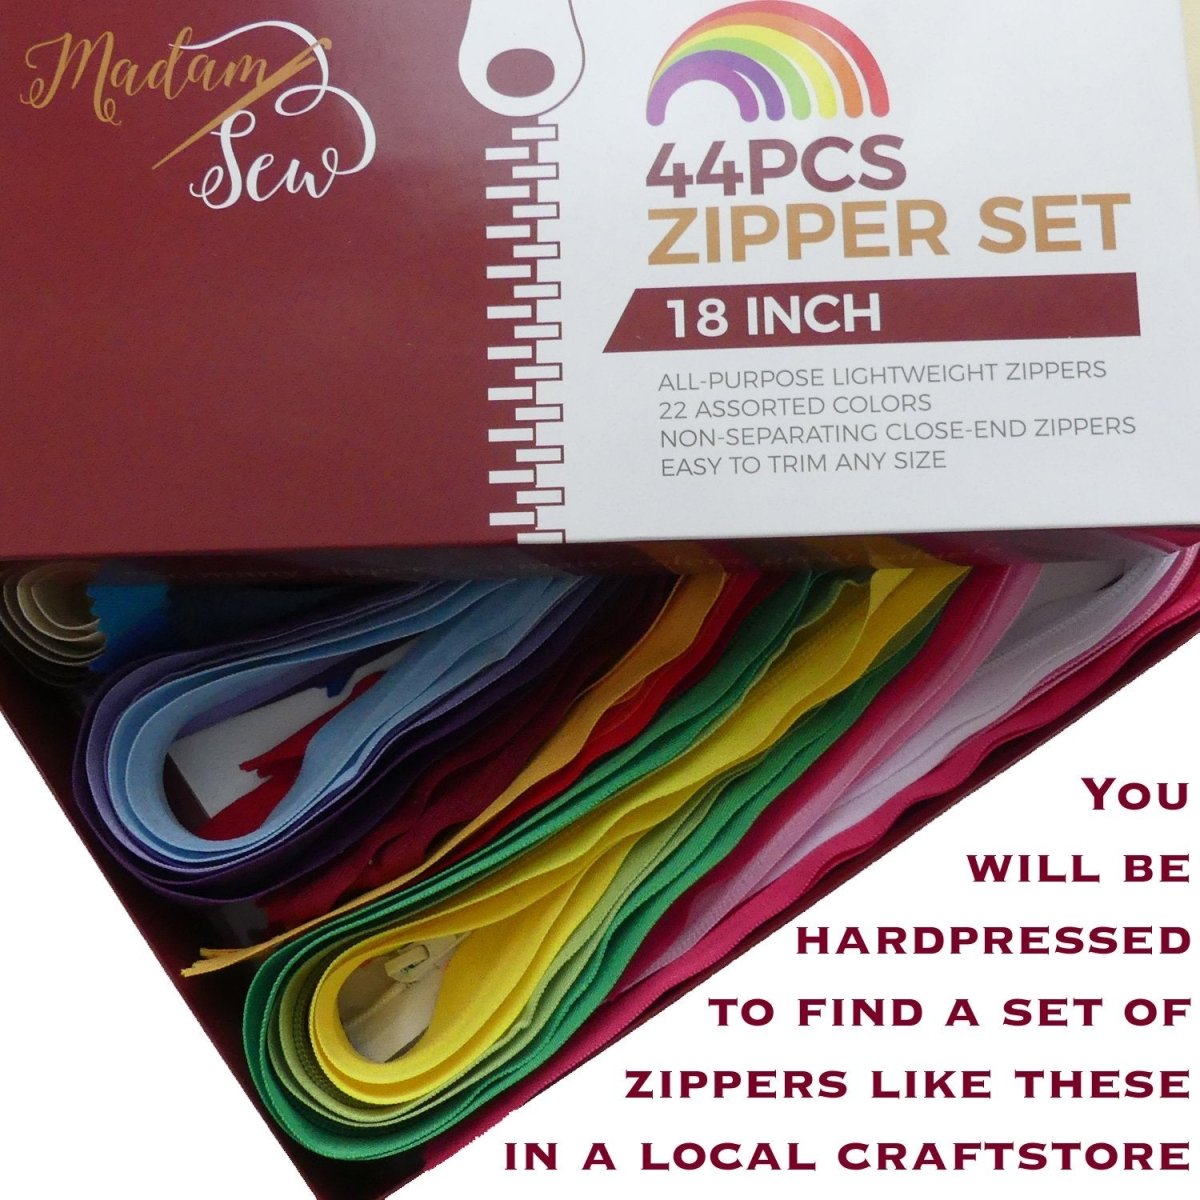 18 inch zippers in a MadamSew box